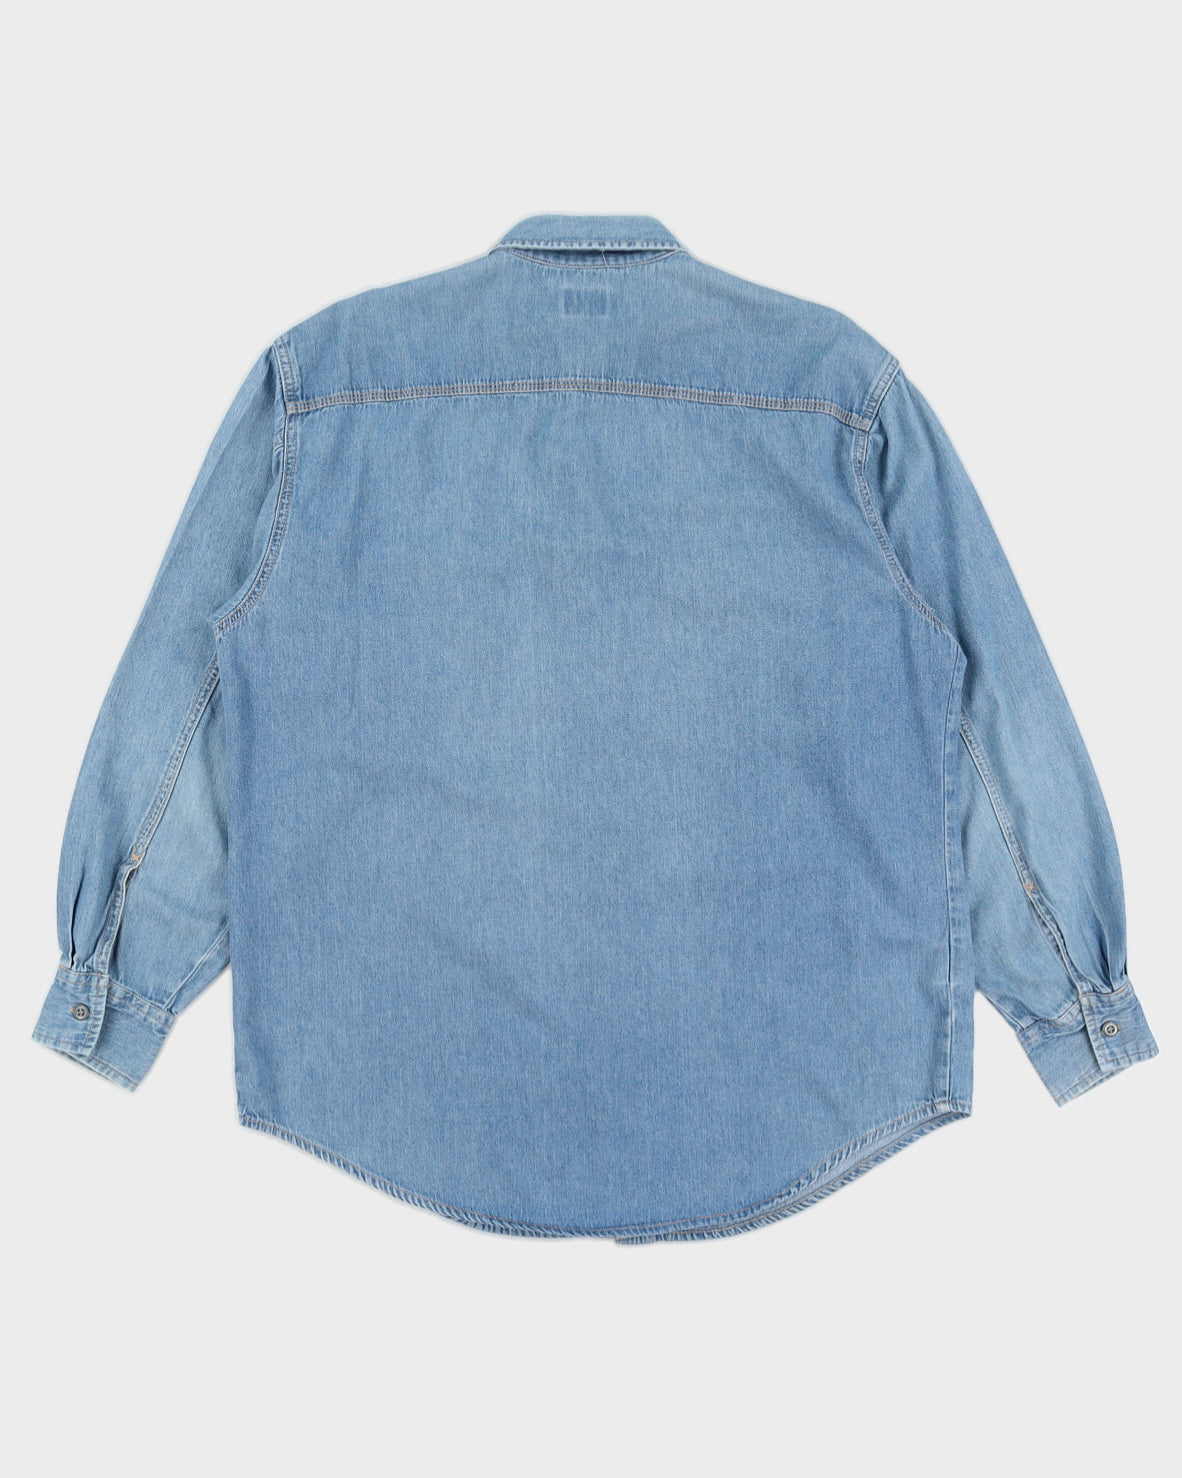 Vintage 90s Calvin Klein Denim Long Sleeved Shirt - L